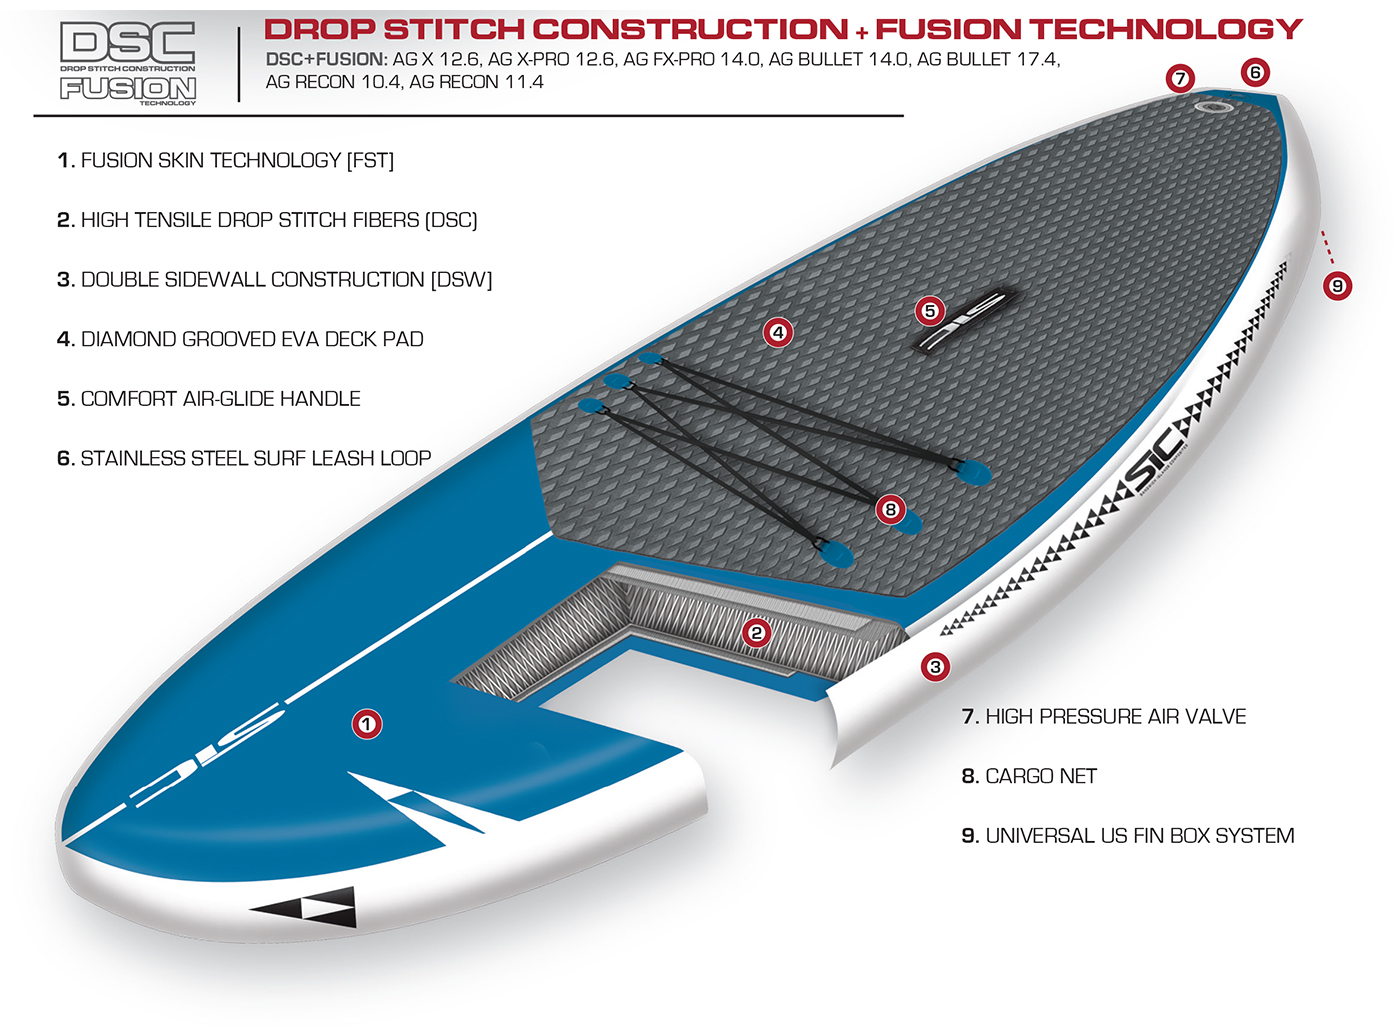 Drop Stitch Construction - Fusion Technology